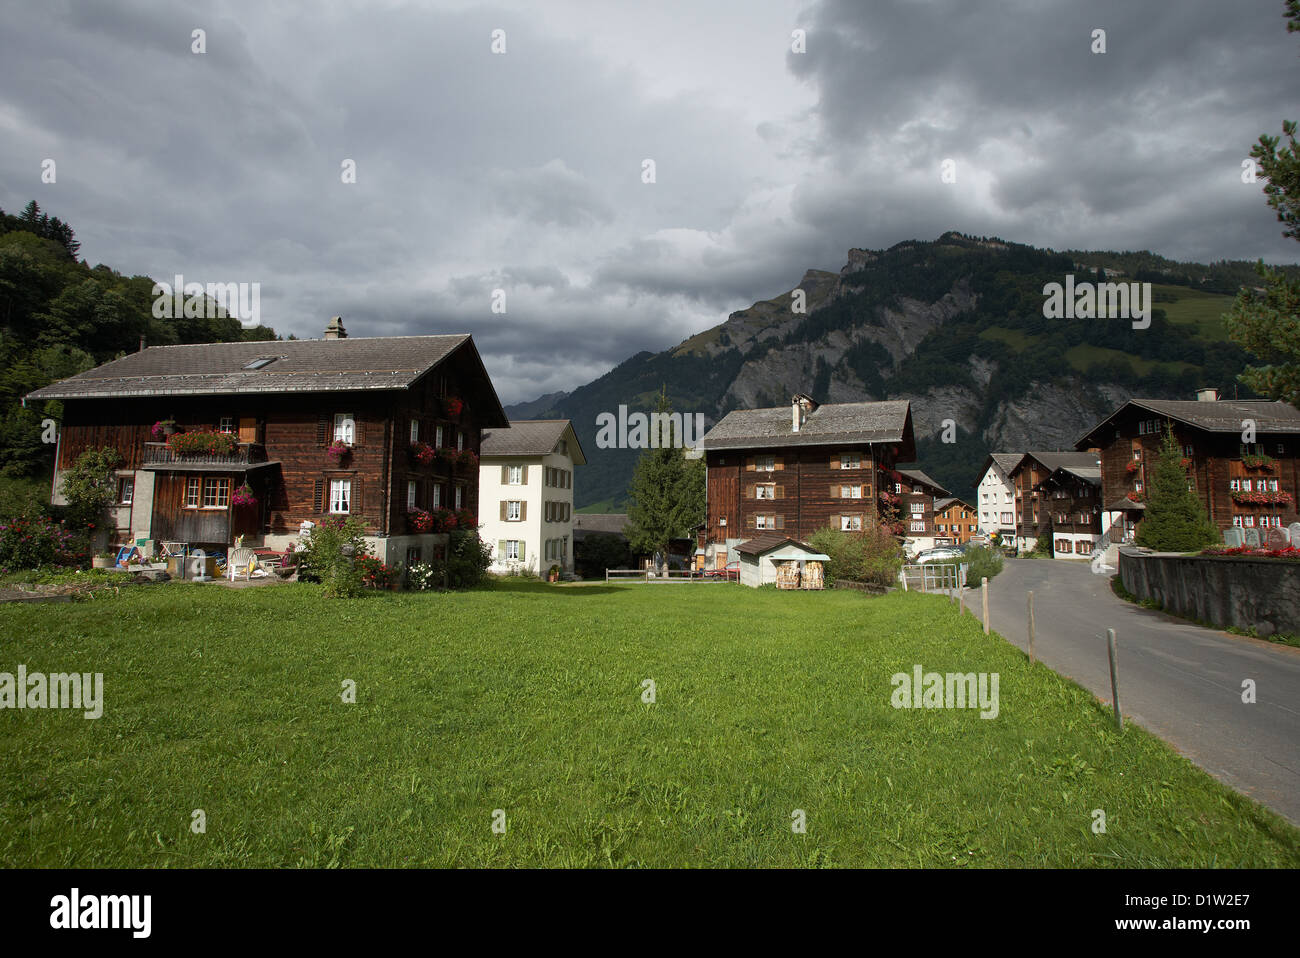 Elm, Switzerland, overlooking Elm with its historic houses Stock Photo